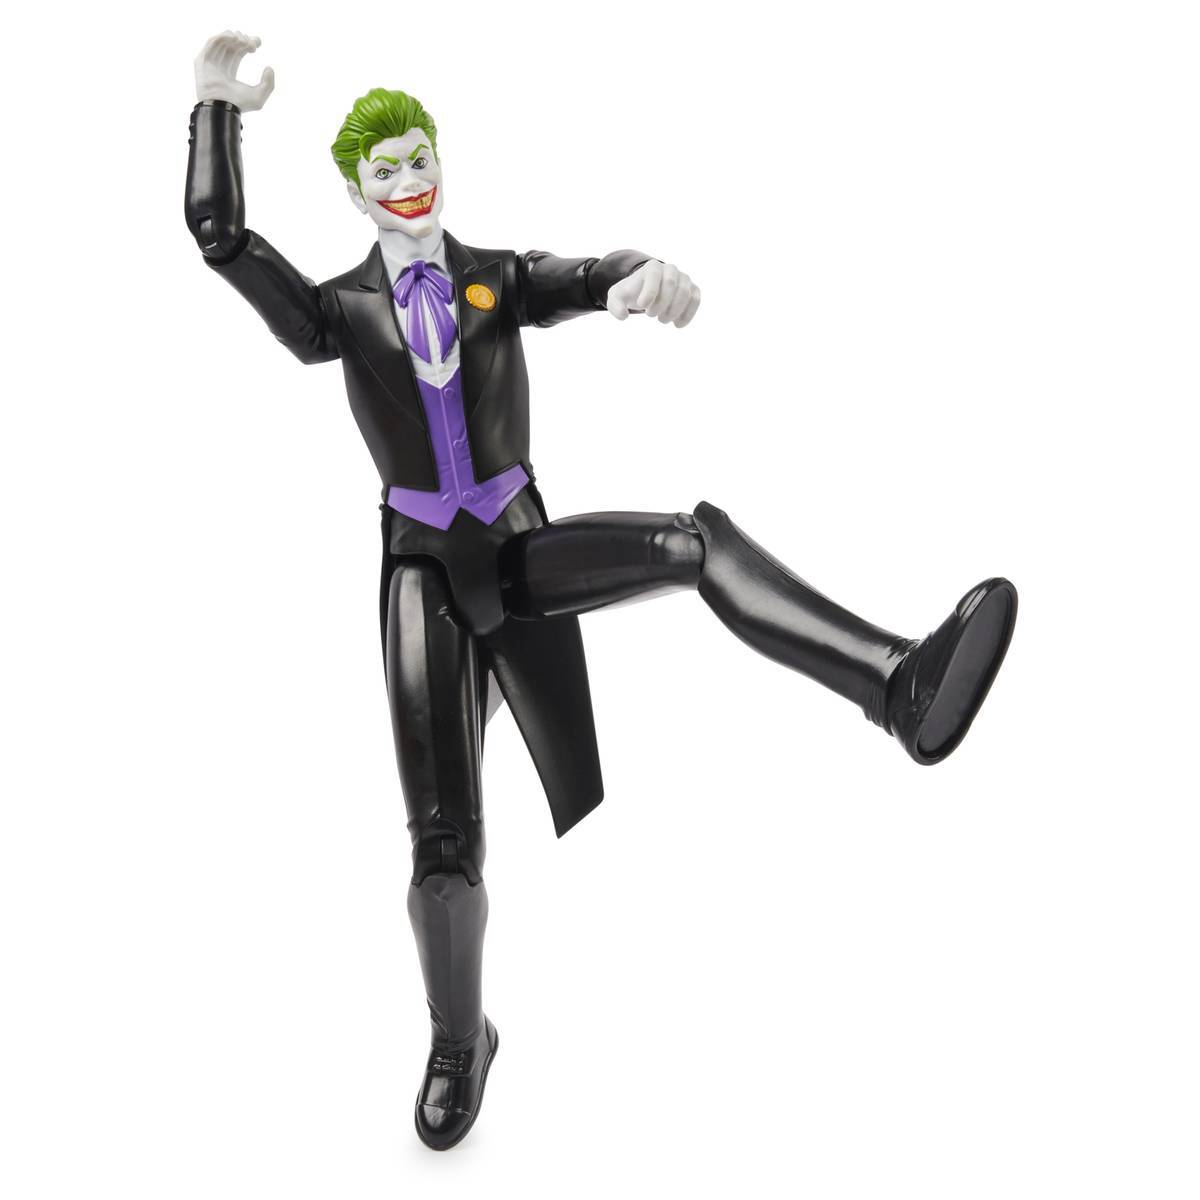 DC Comics Action Figure - The Joker